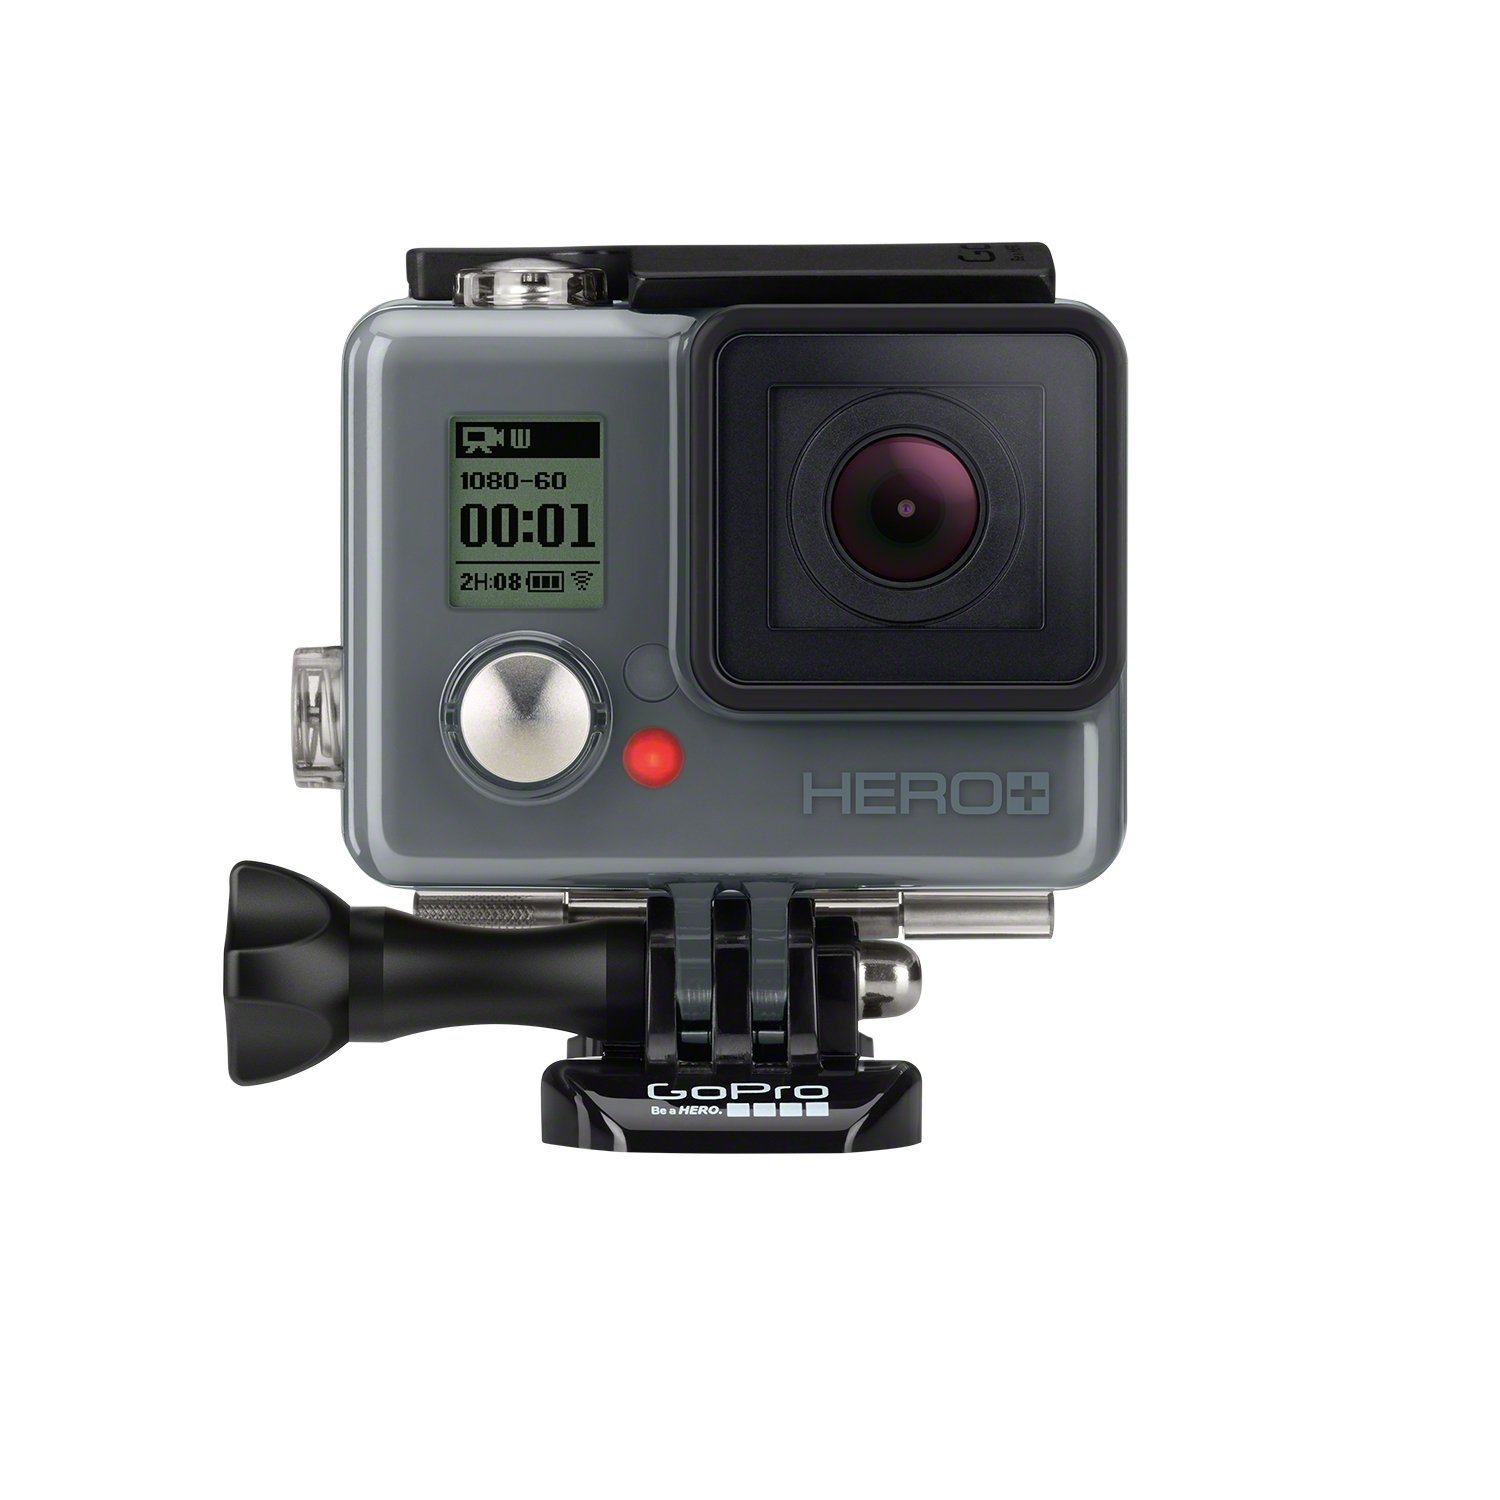 Save big on GoPro HERO+ LCD – Just $149.99!